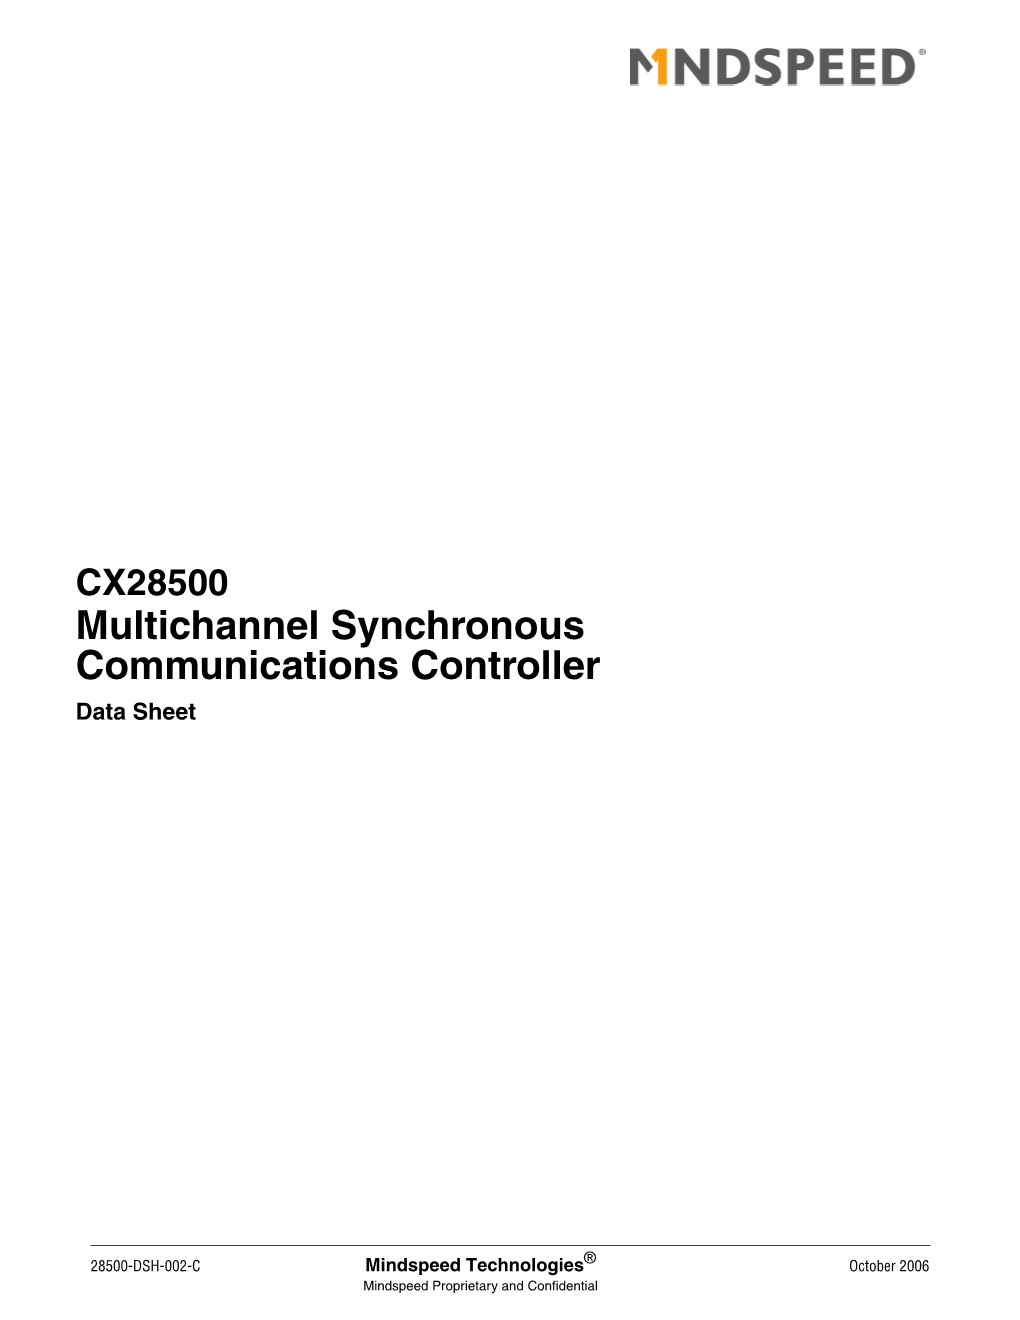 CX28500 Multichannel Synchronous Communications Controller Data Sheet